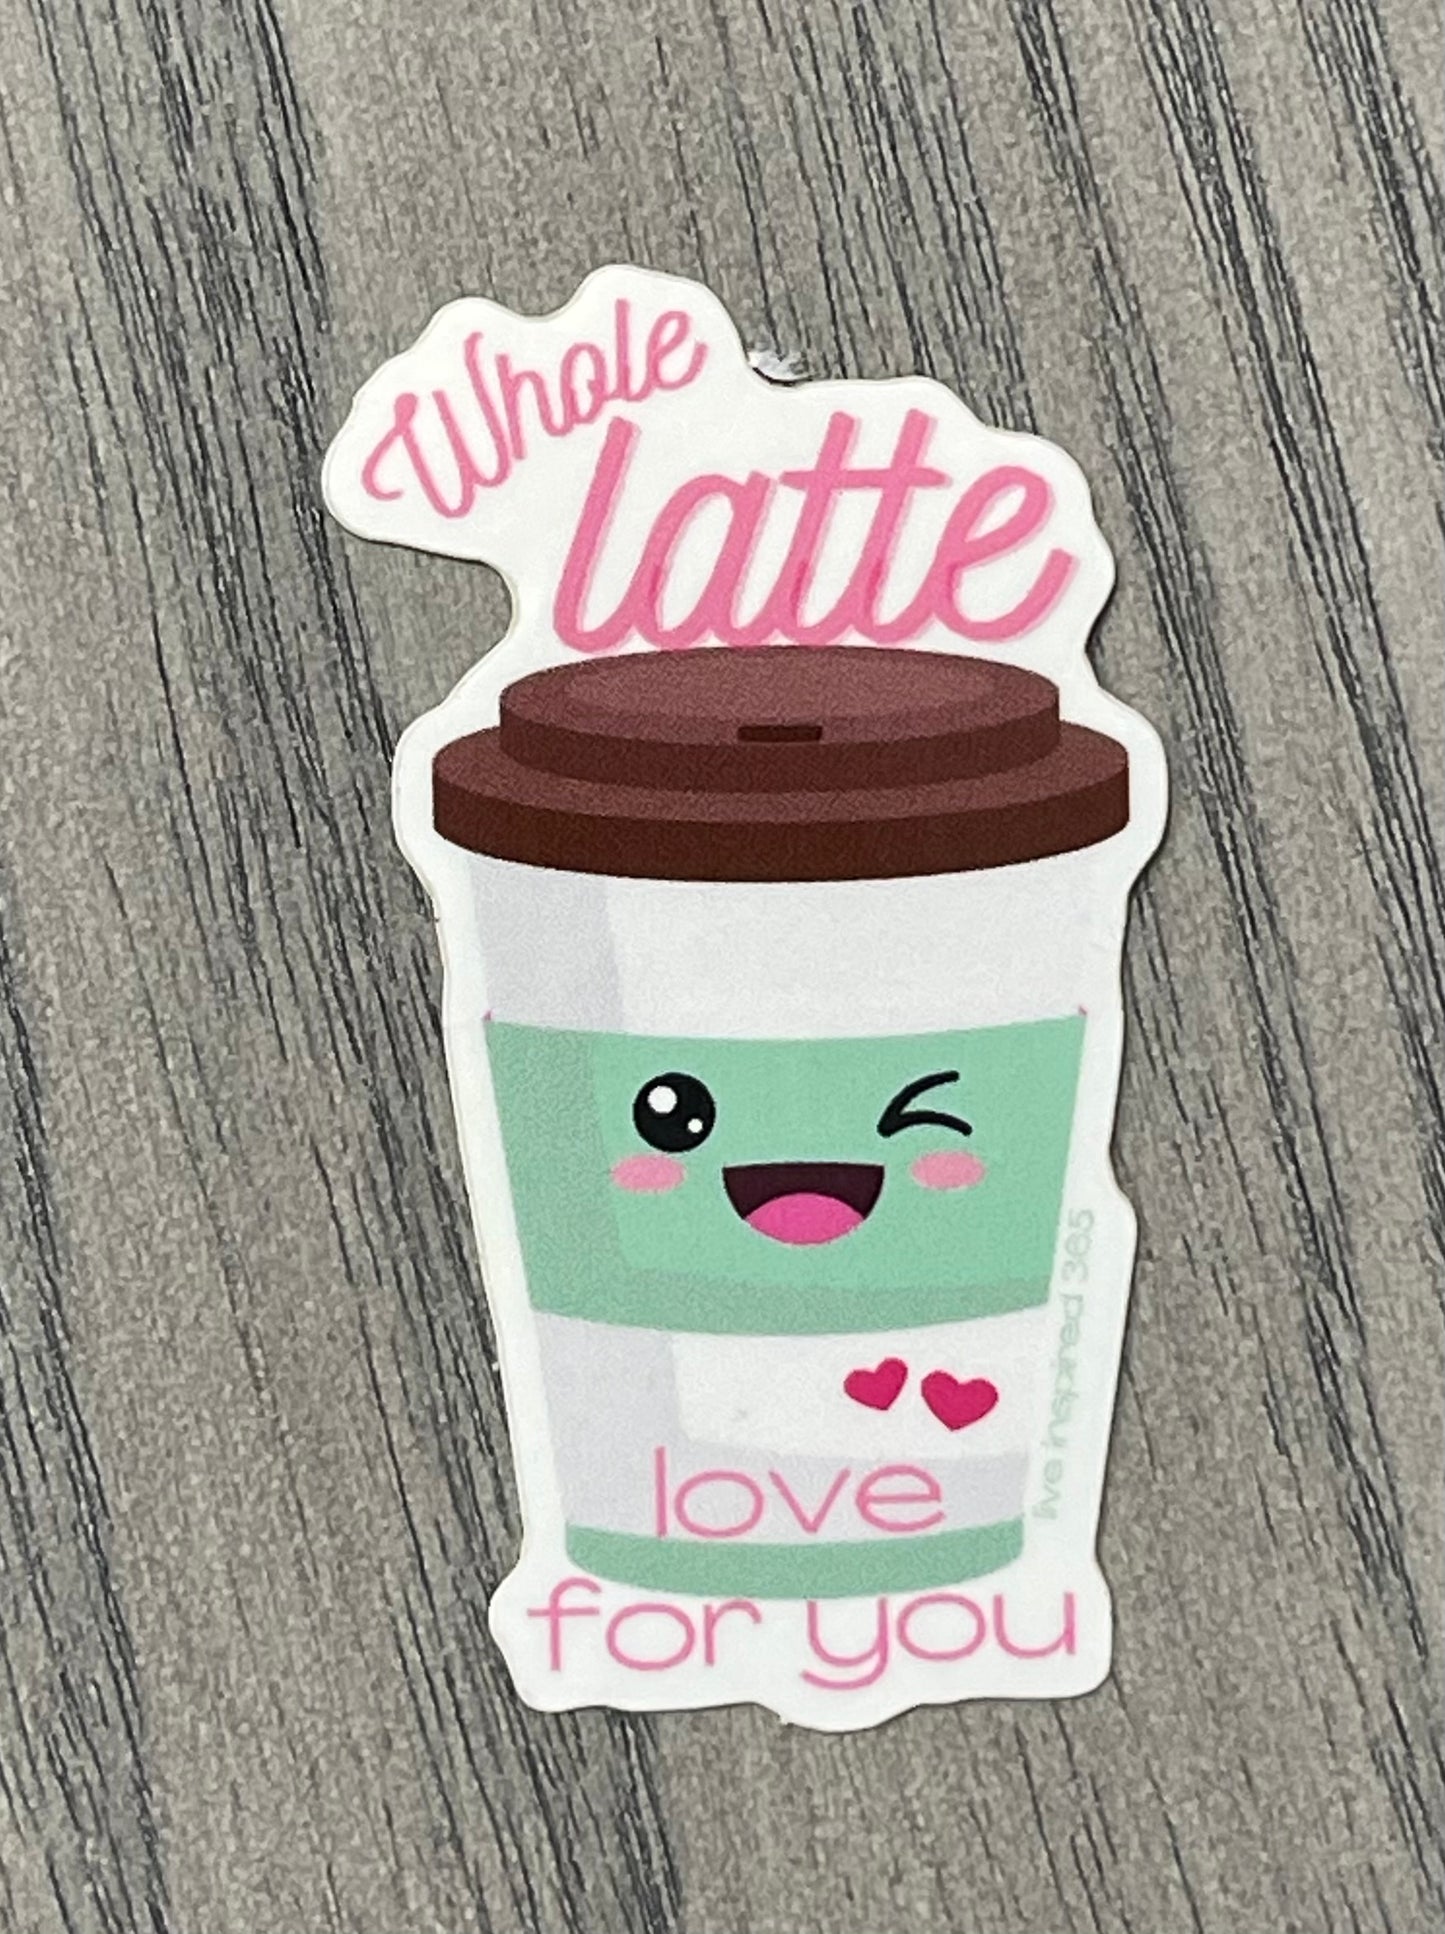 Whole Latte Love Sticker